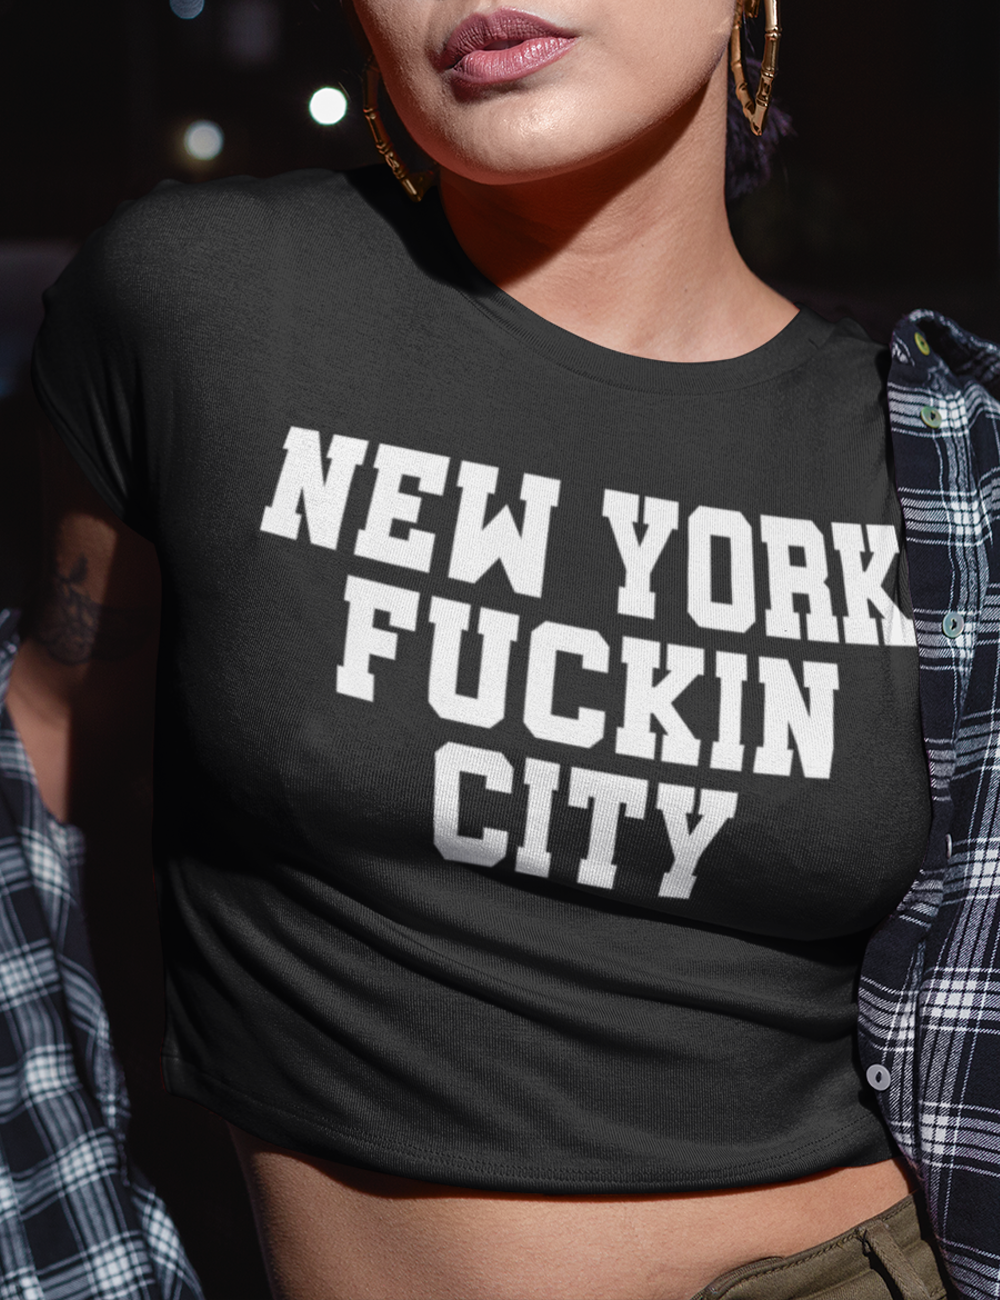 New York Fuckin City Women's Fitted Crop Top T-Shirt OniTakai